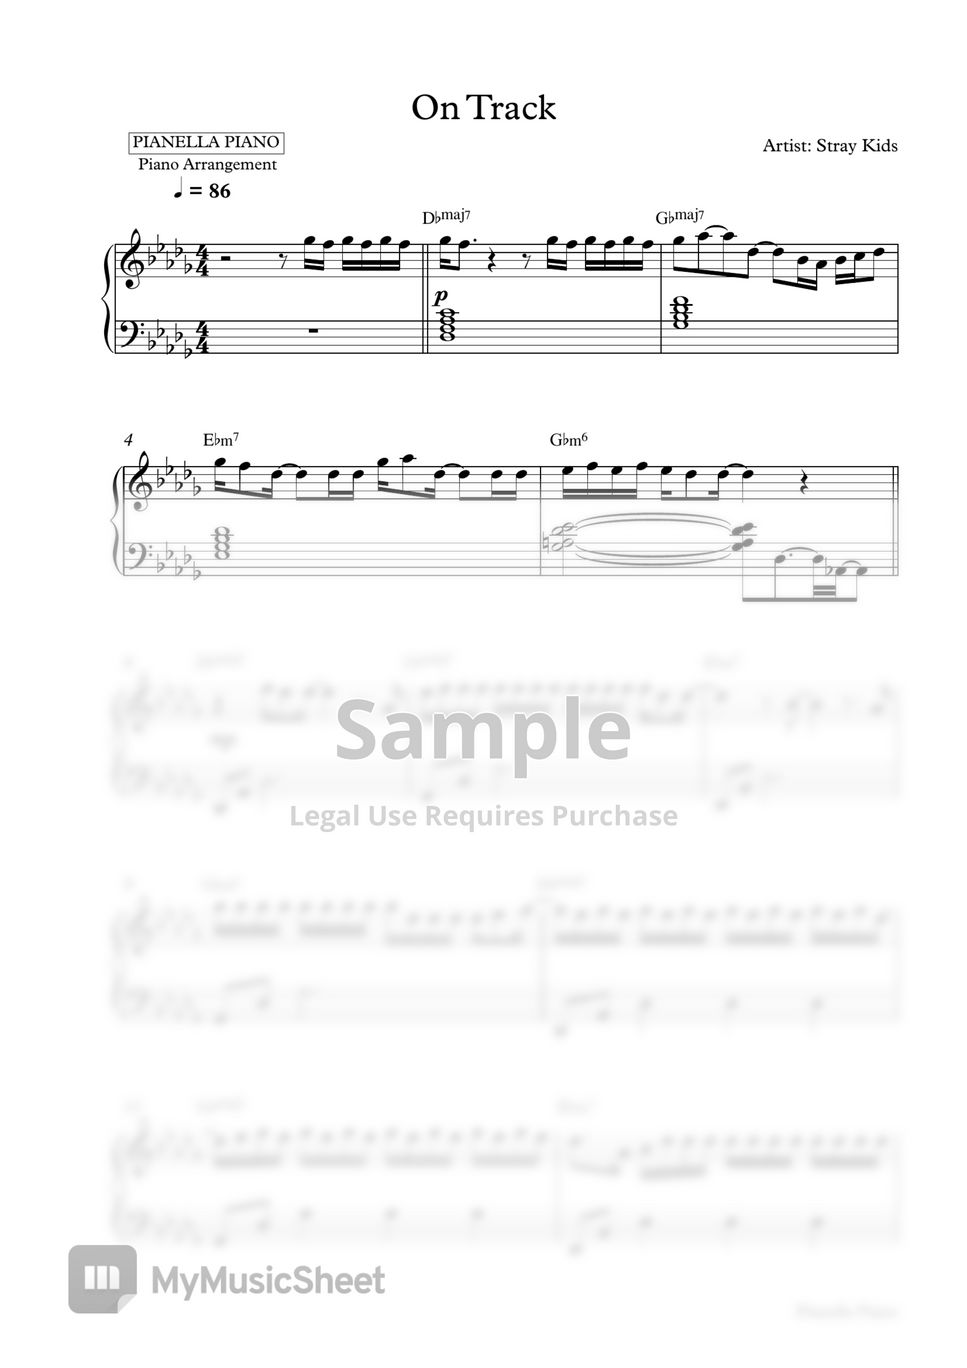 Stray Kids - On Track (Piano Sheet) by Pianella Piano